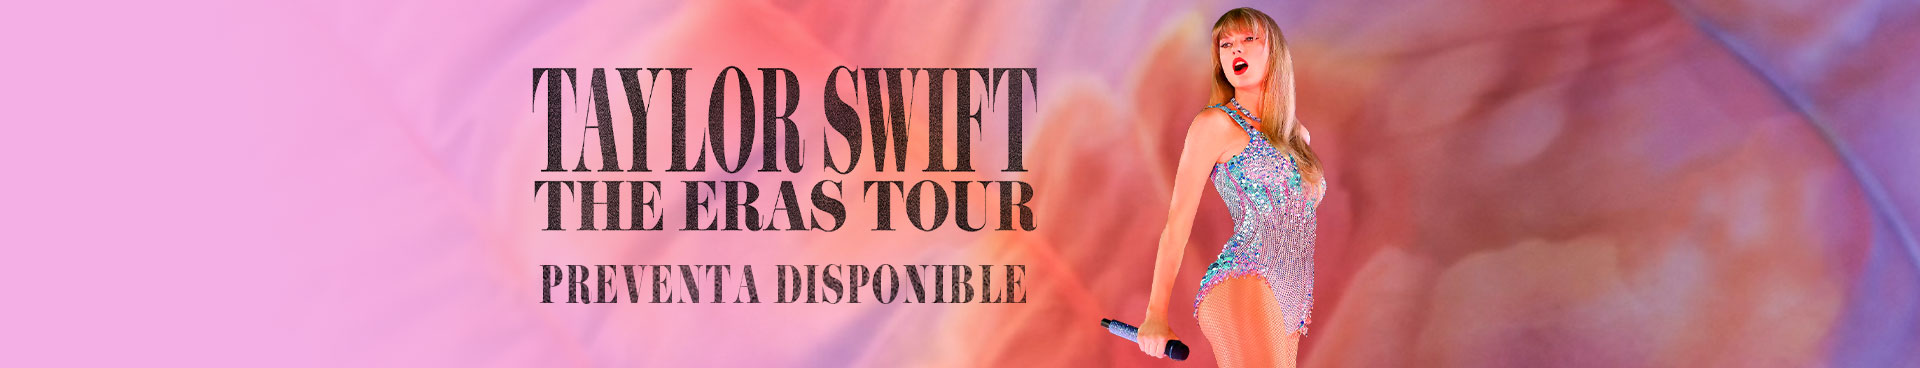 Taylor Swift the eras tour